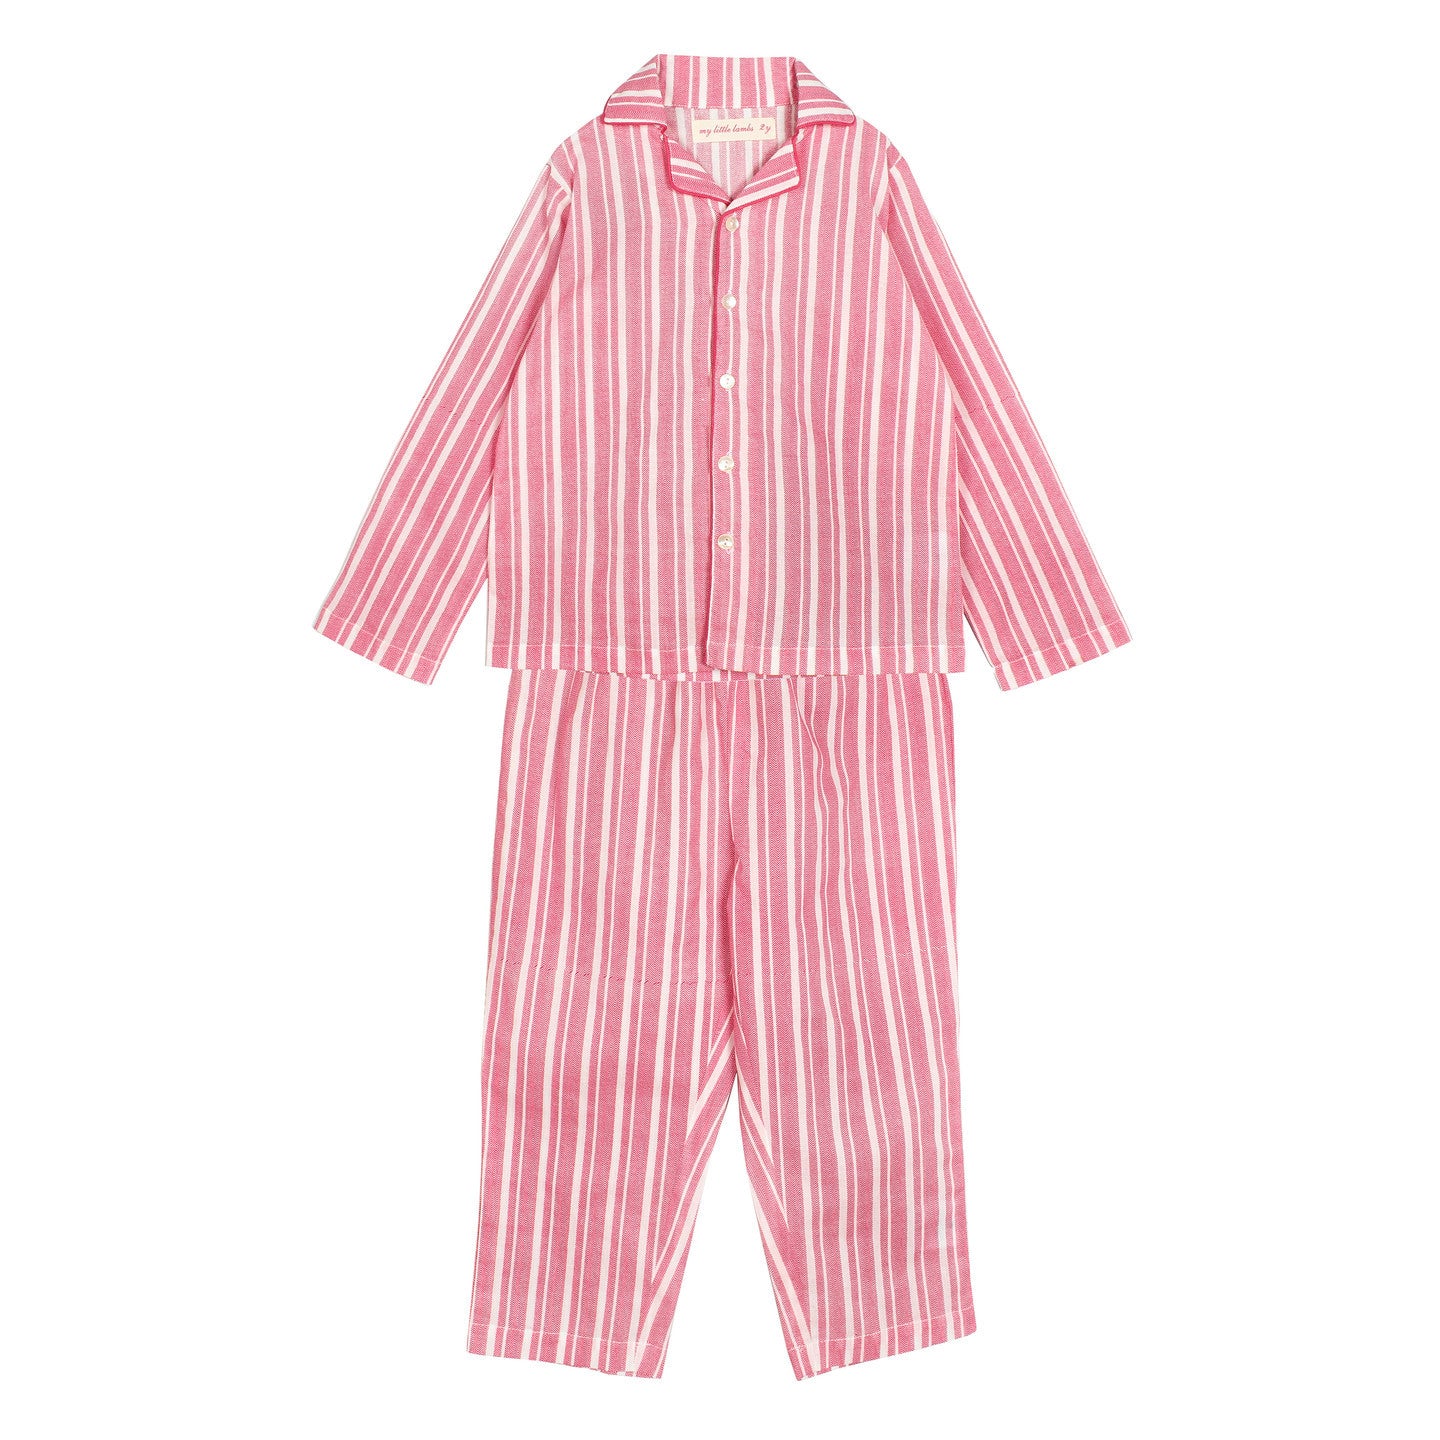 Printed Girl's Night Suit Set Chevron Stripes Pink